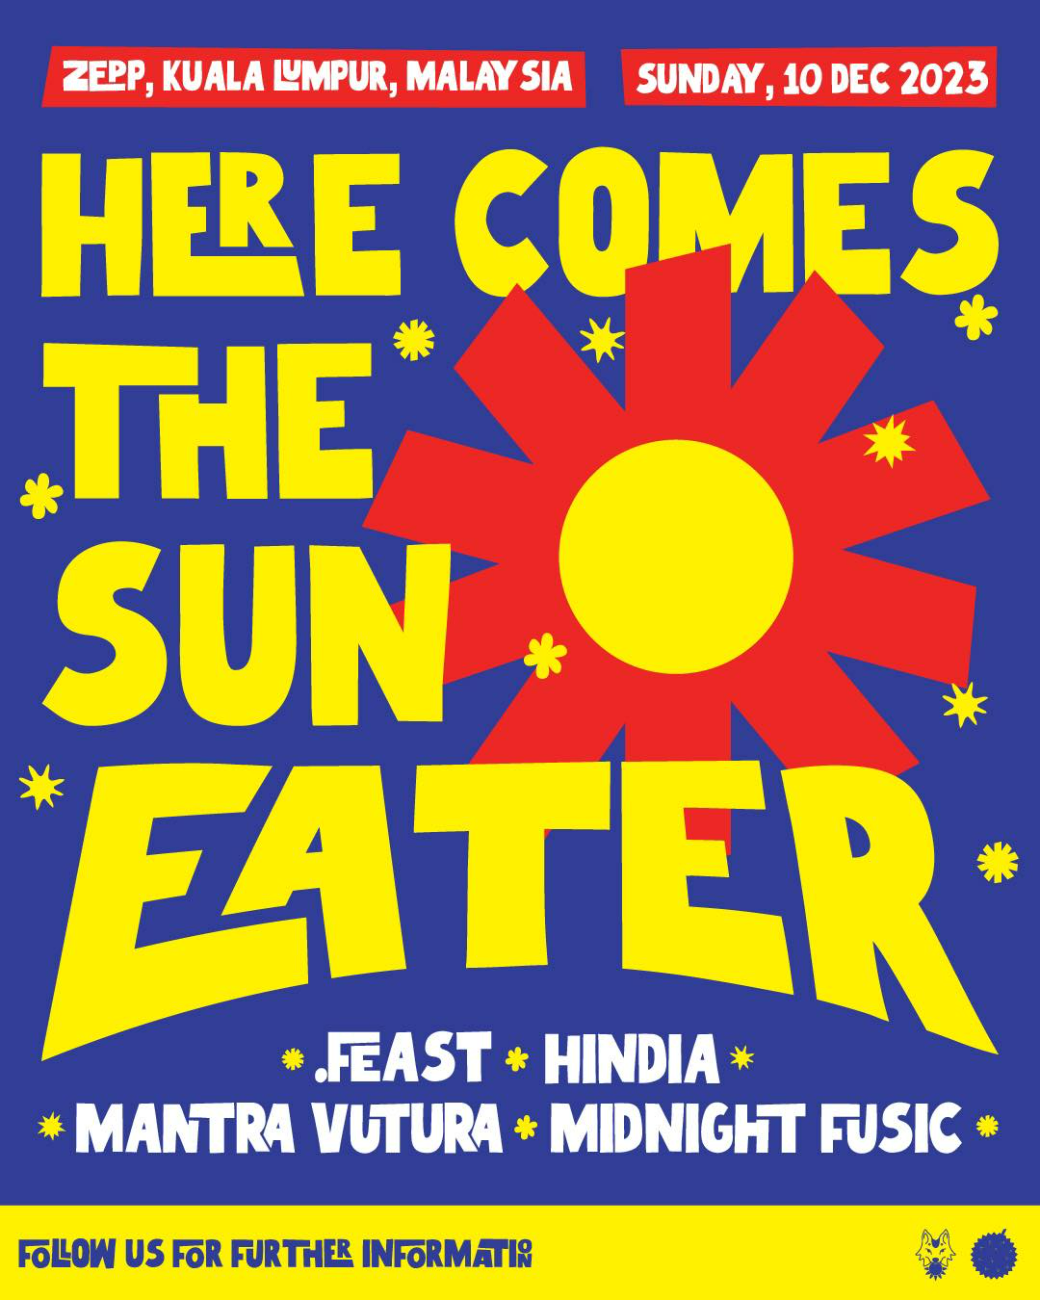 Here Comes The Sun Eater │Hindia, Feast, Mantra Vutura dan Midnight Fusic